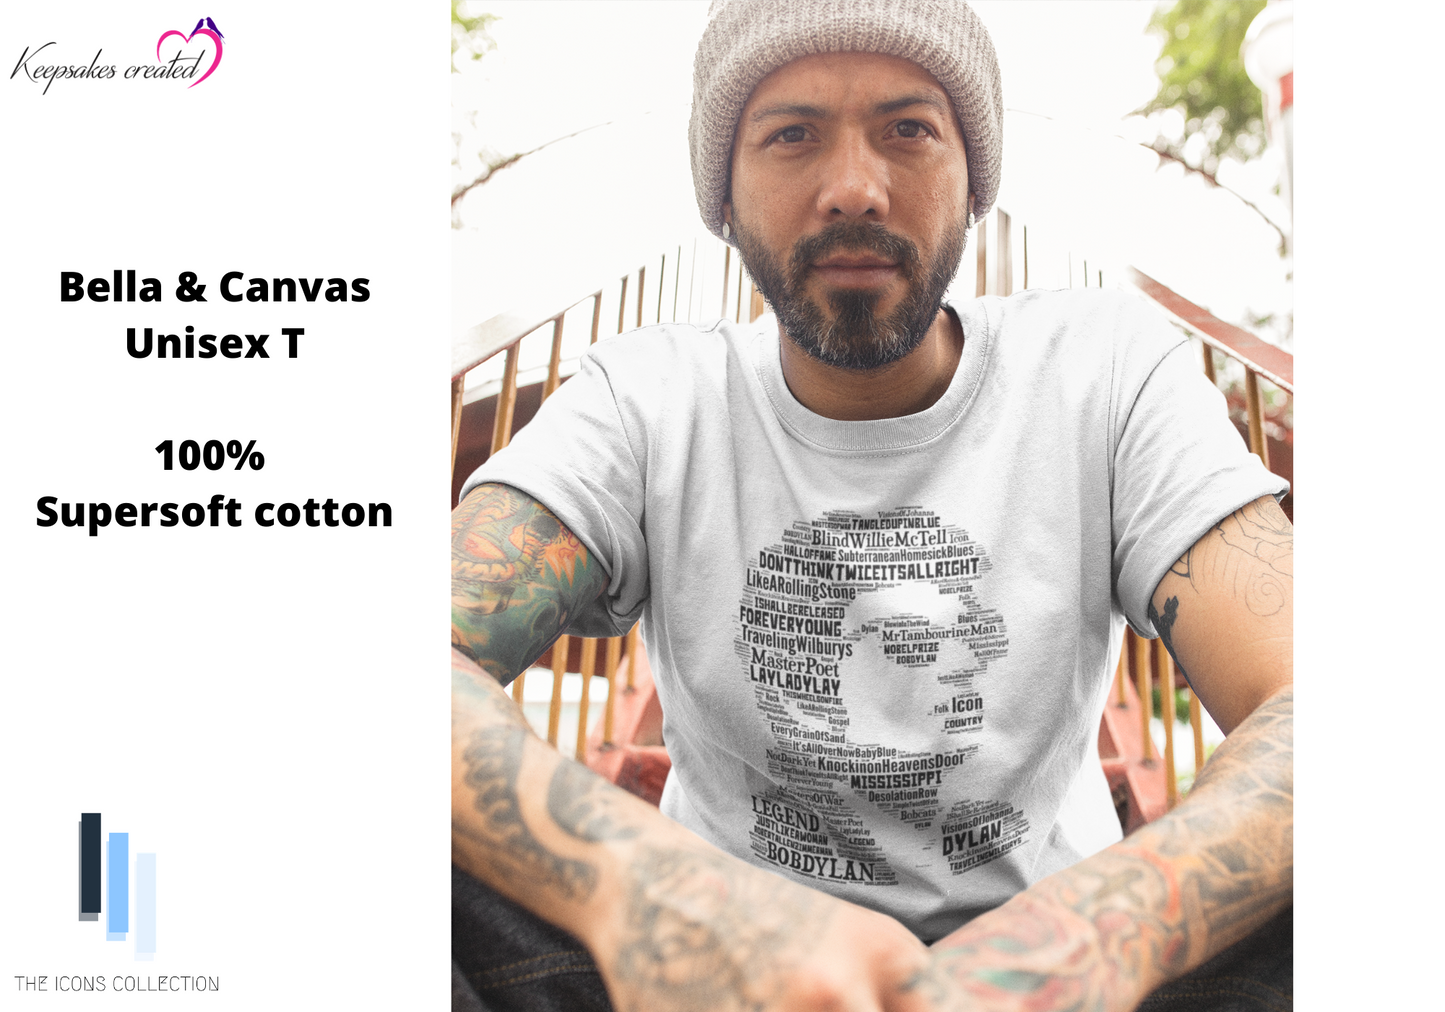 Bob Dylan Portrait in songs Unisex T Shirt-100% Super soft cotton